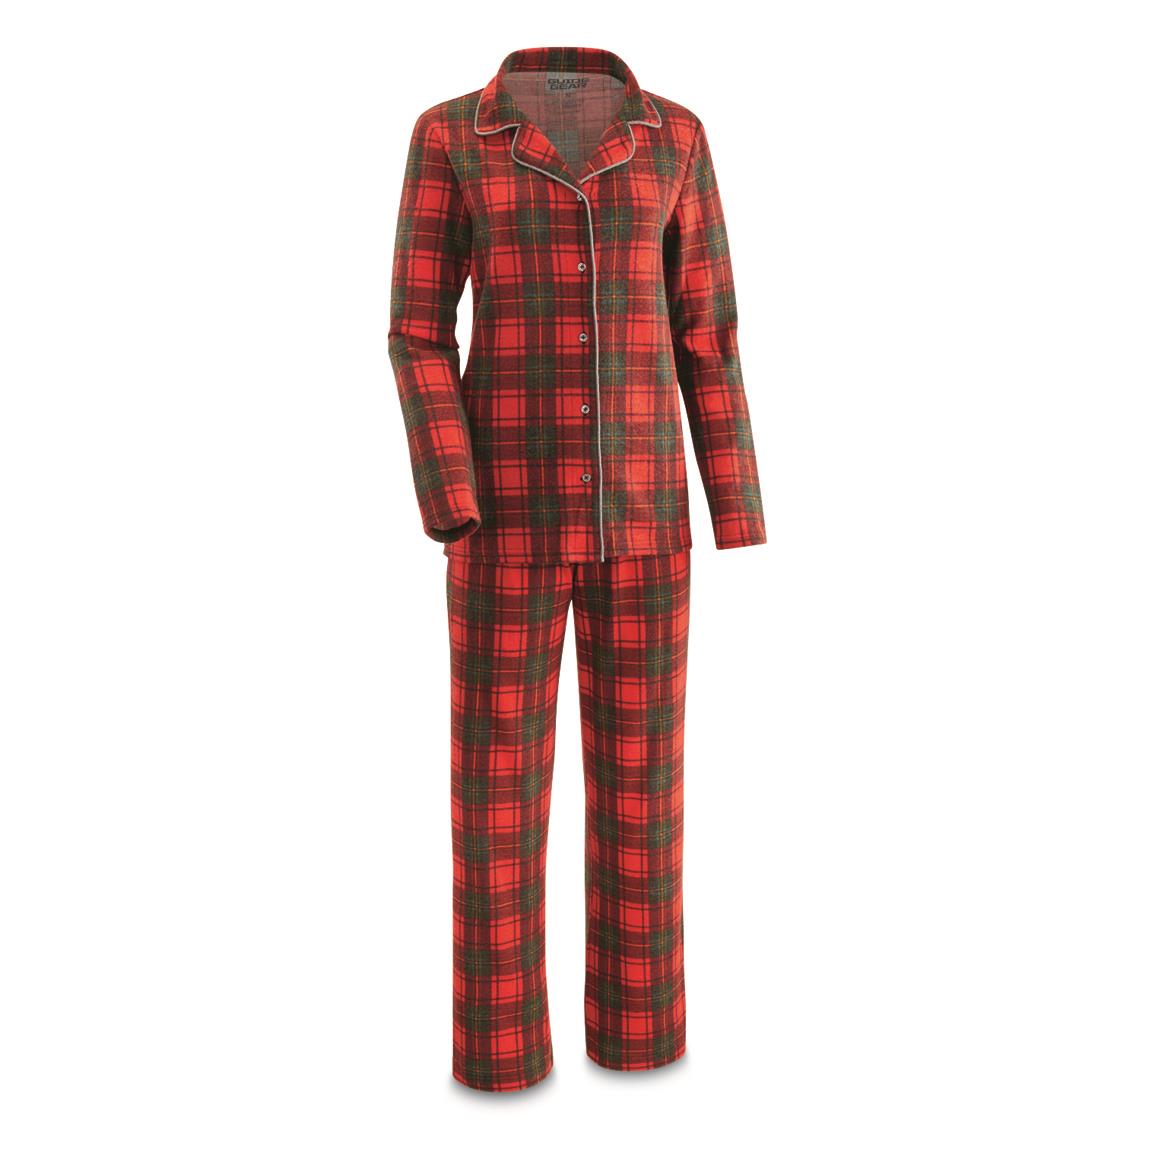 Guide Gear Women's 2-piece Button-front Pajama Set, Red Tartan Plaid